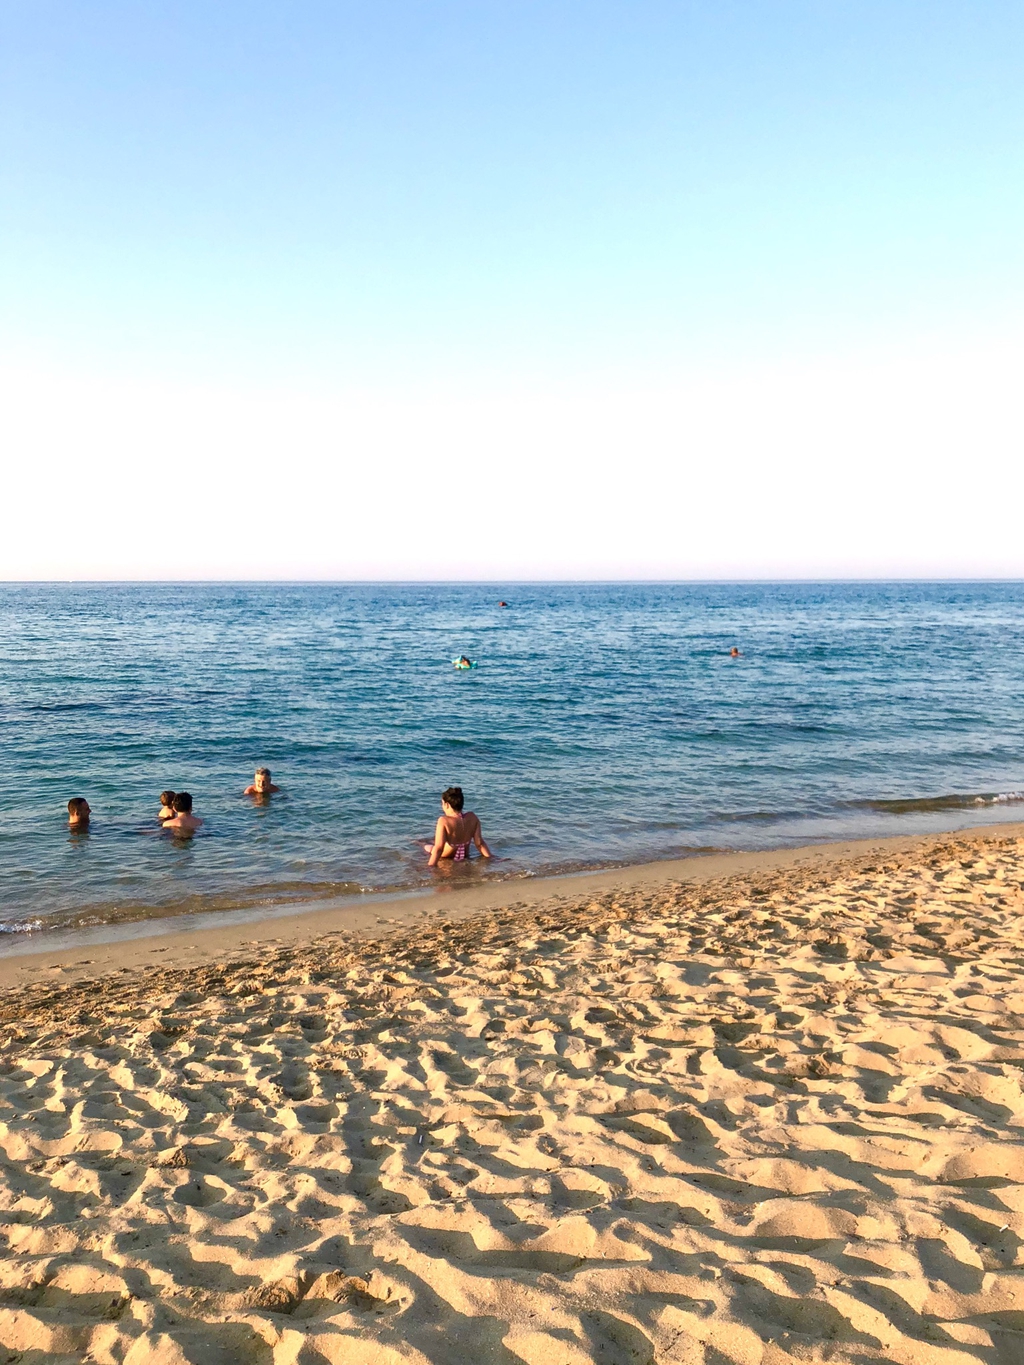 Spiaggia di Pantanagianni - Carovigno, (Brindisi), Puglia